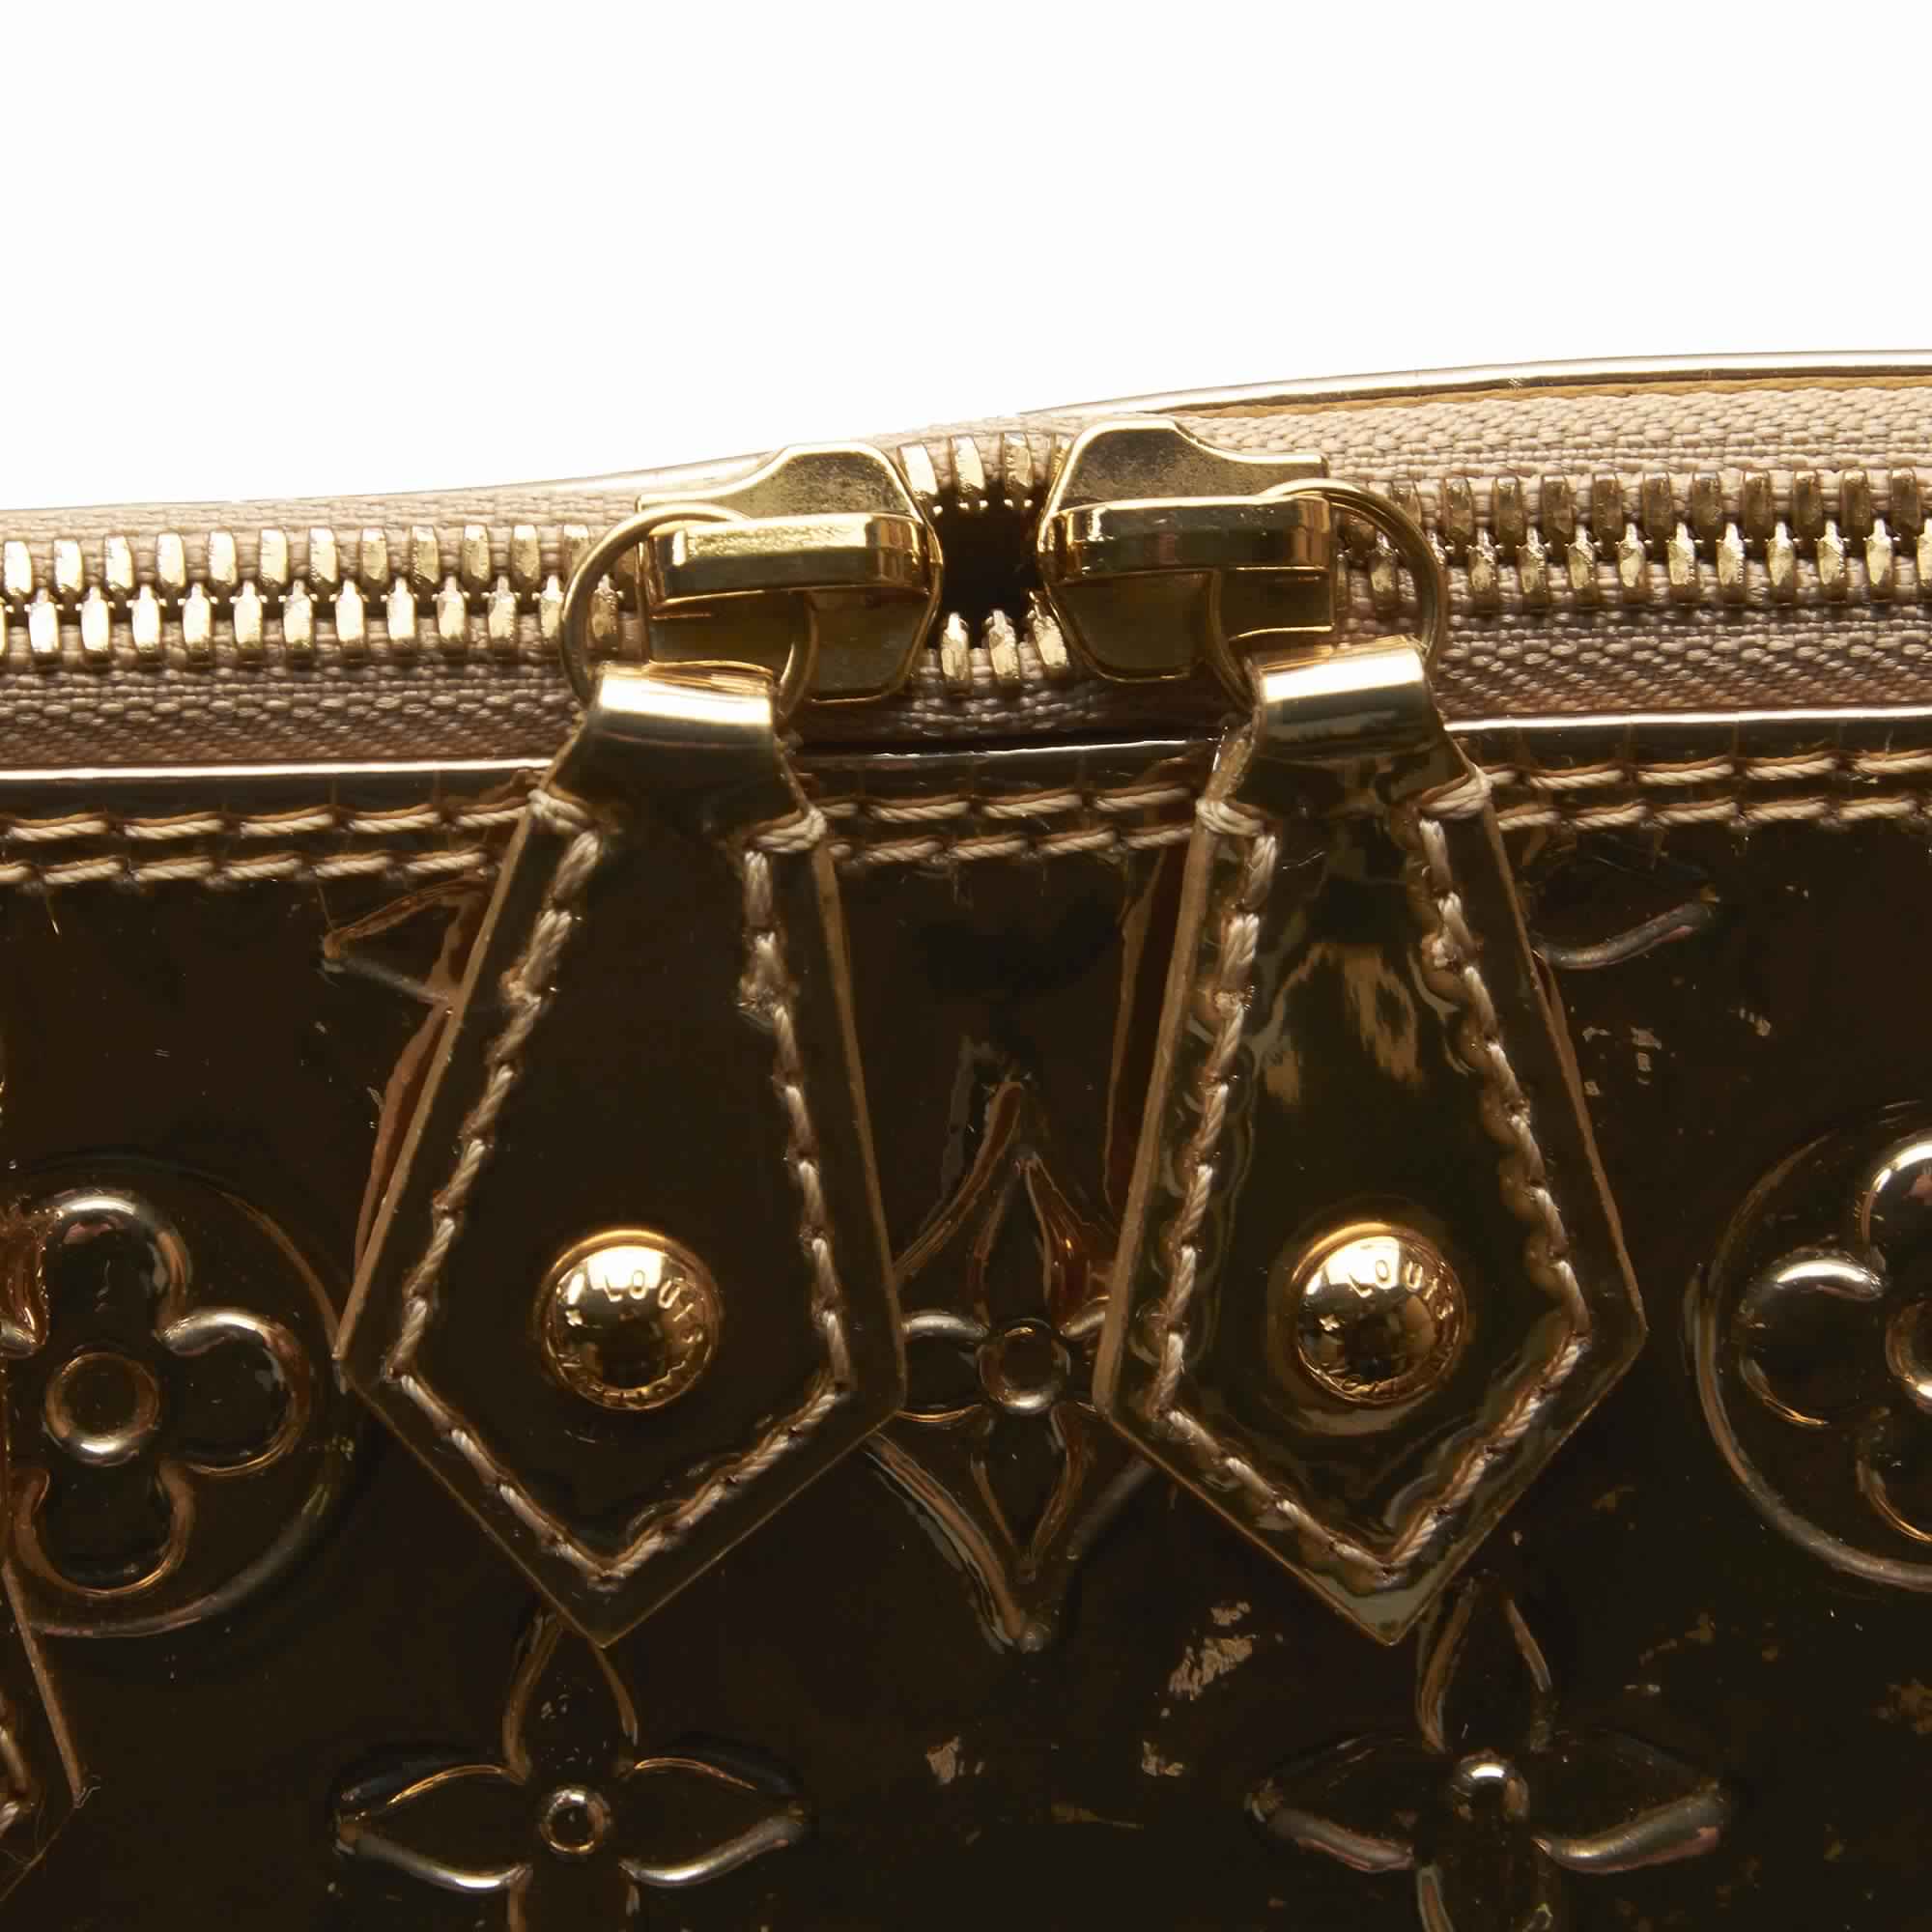 Louis Vuitton Gold Monogram Miroir Limited Edition Alma MM Bag